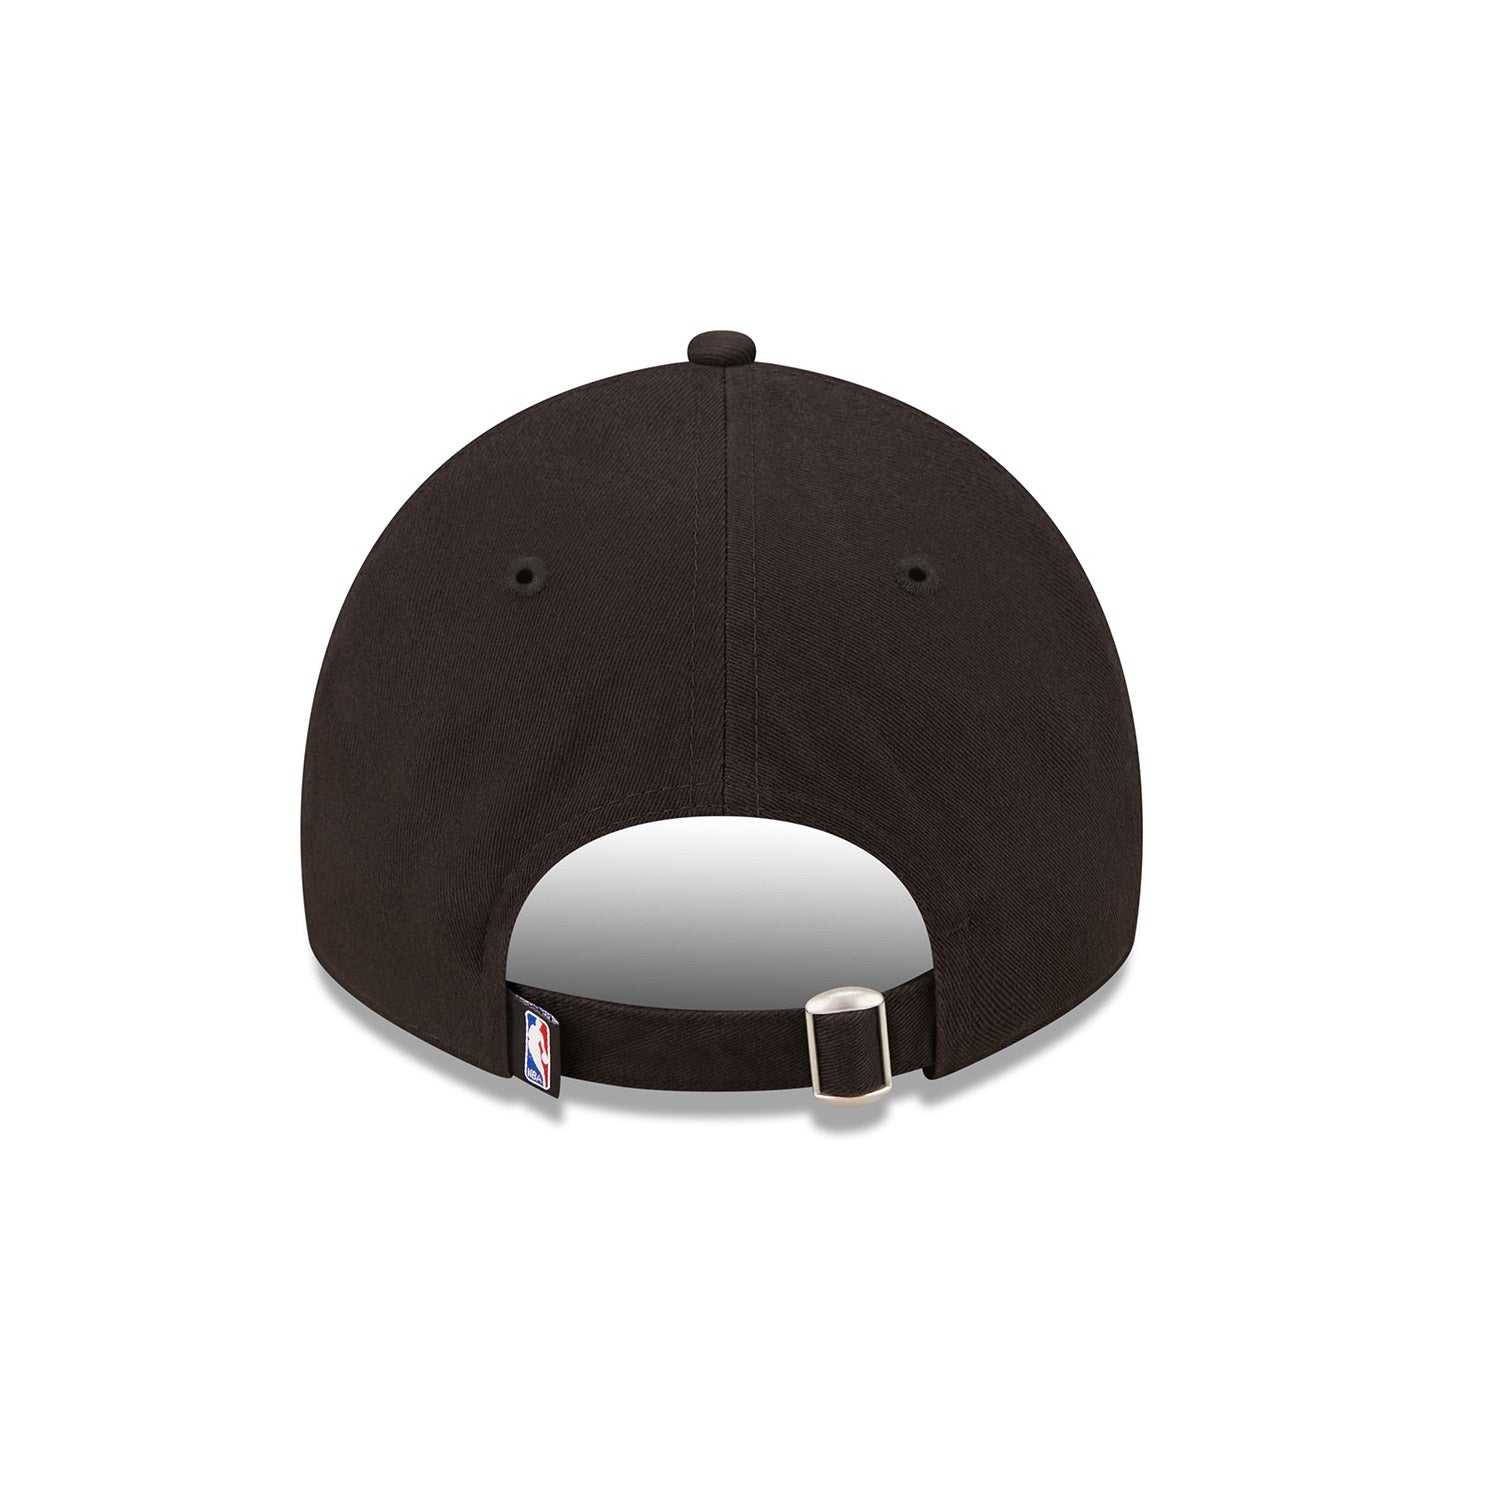 New Era Knicks Skyline Tip Off Adjustable Hat